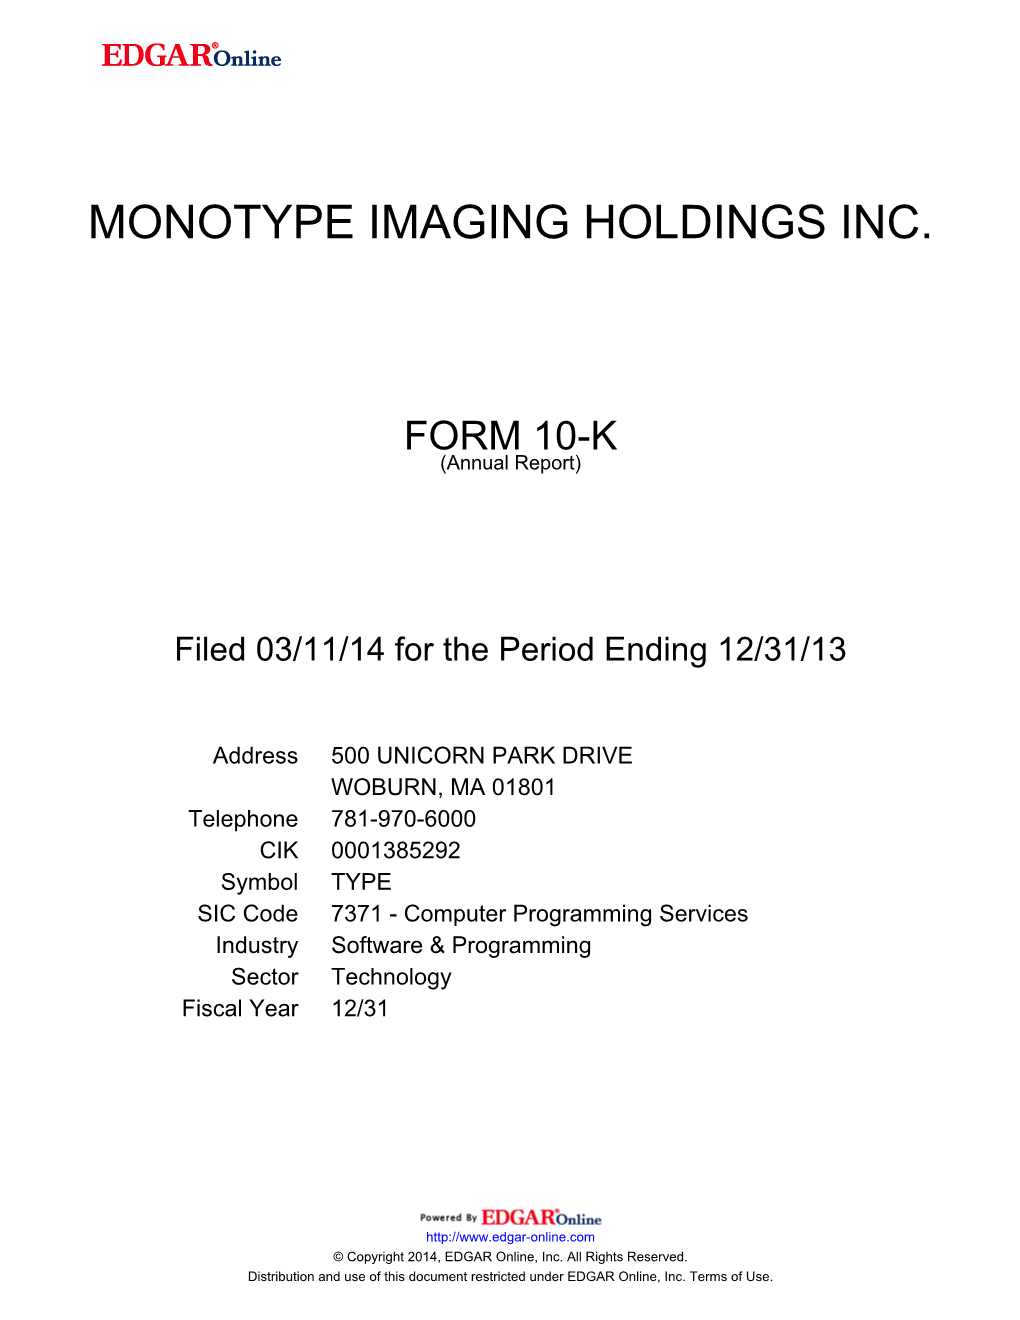 Monotype Imaging Holdings Inc